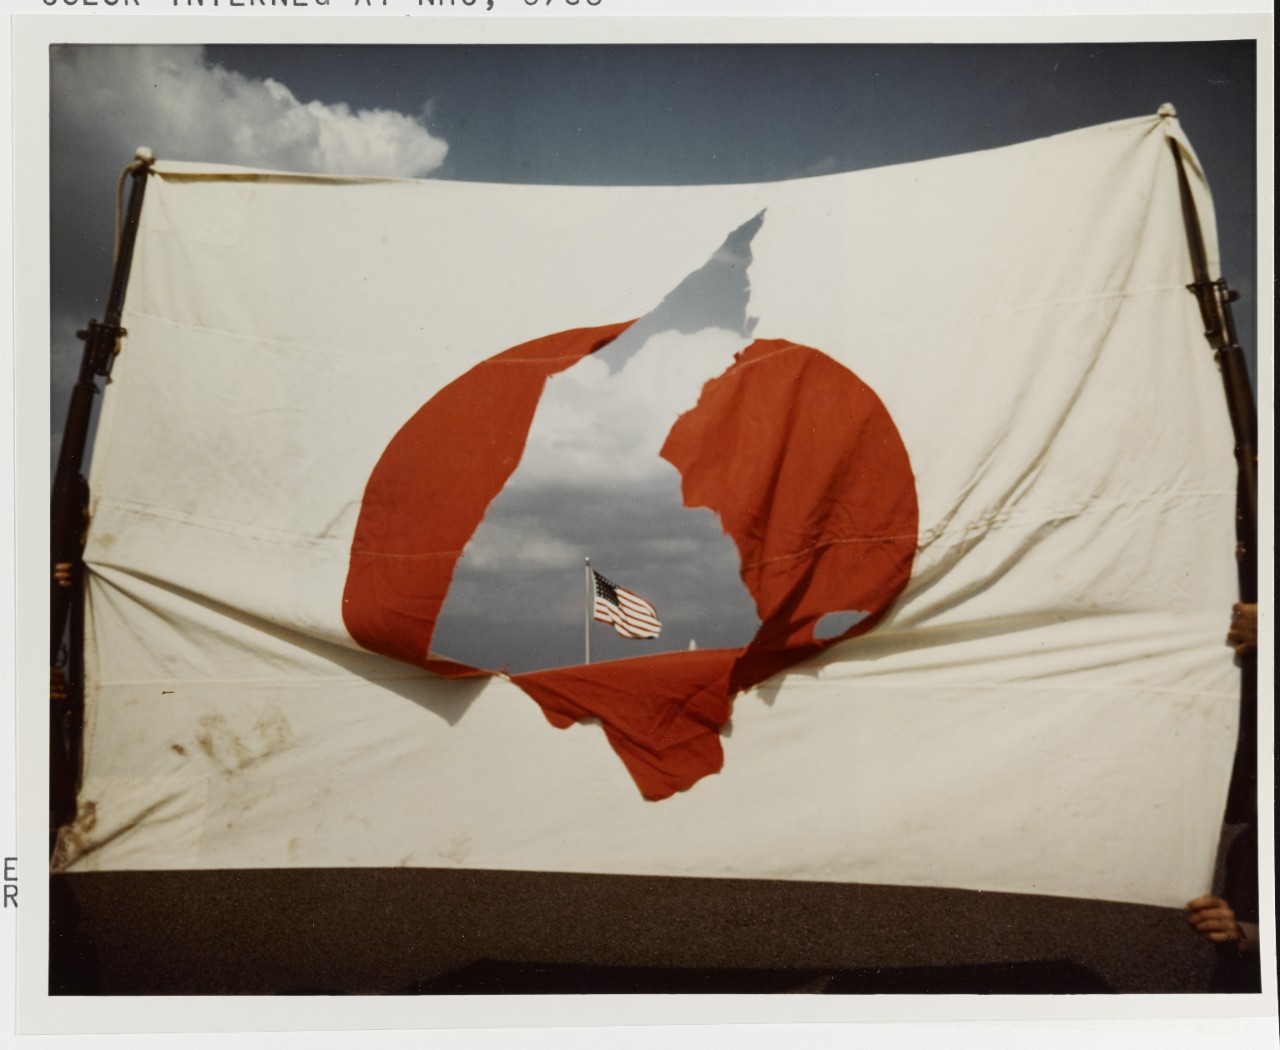 Japanese Flag captured by U.S. Marines in Solomon Islands